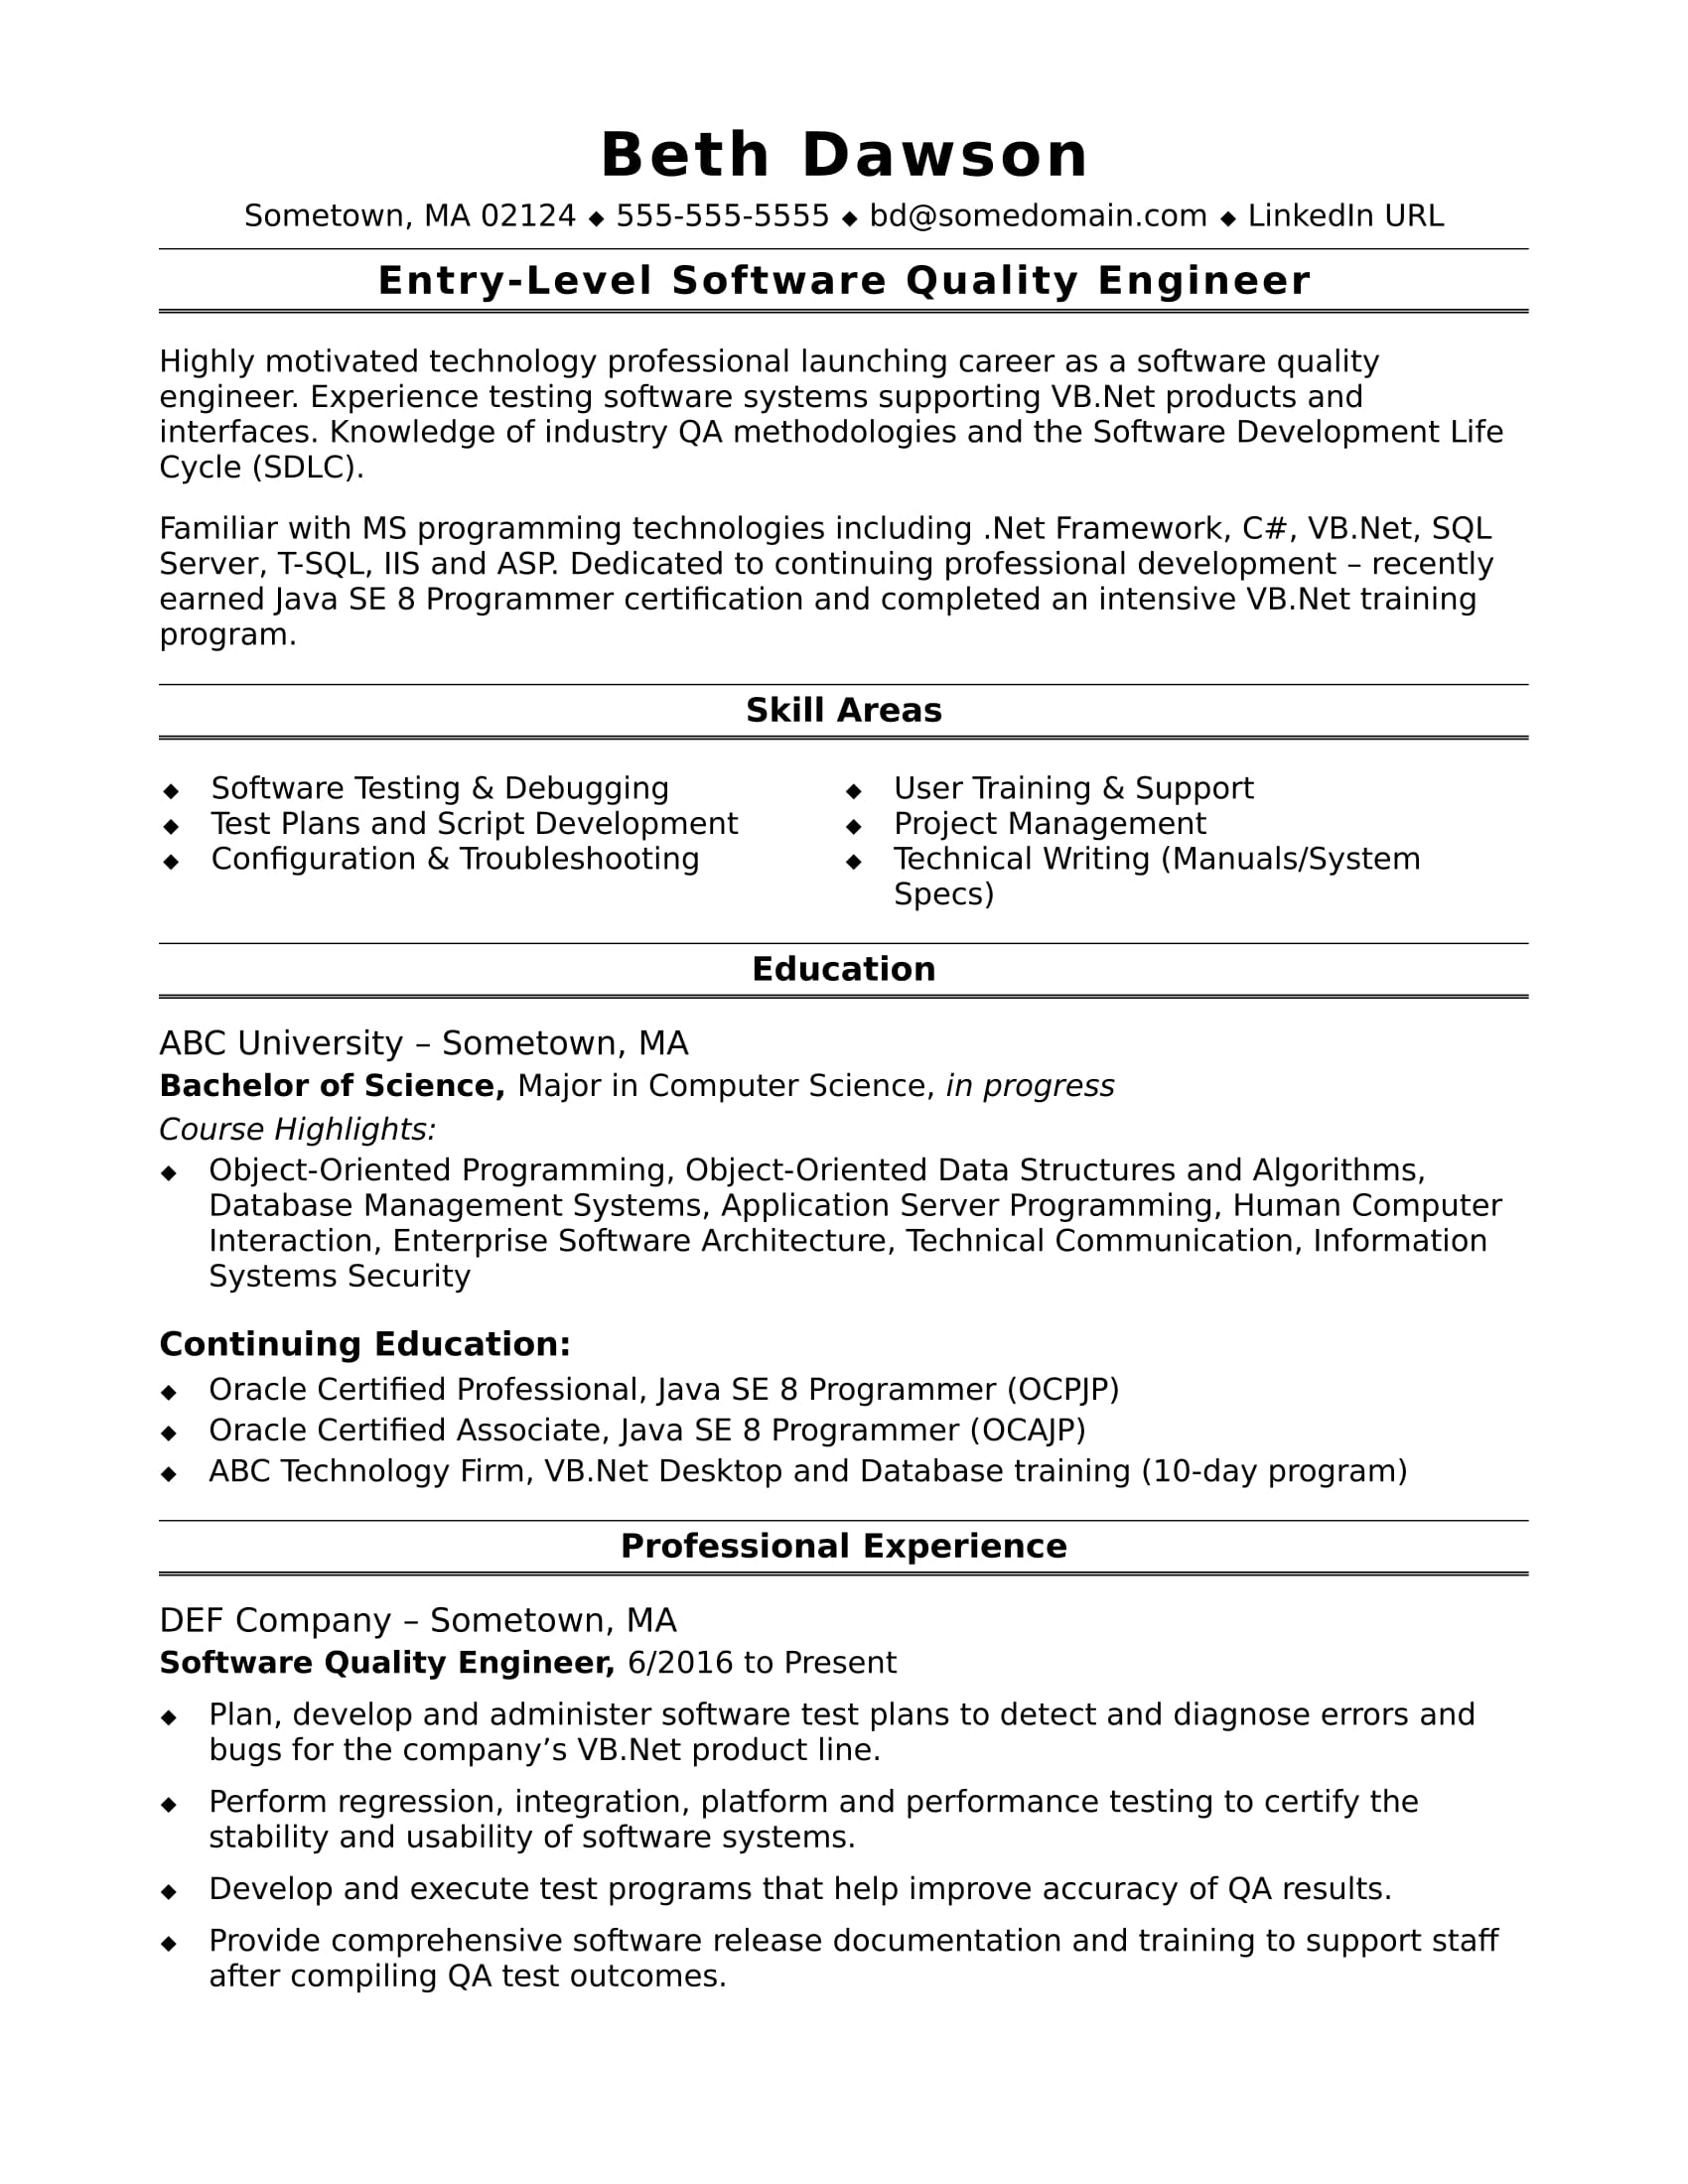 Sample Resume For An Entry Level Quality Engineer Monster Com